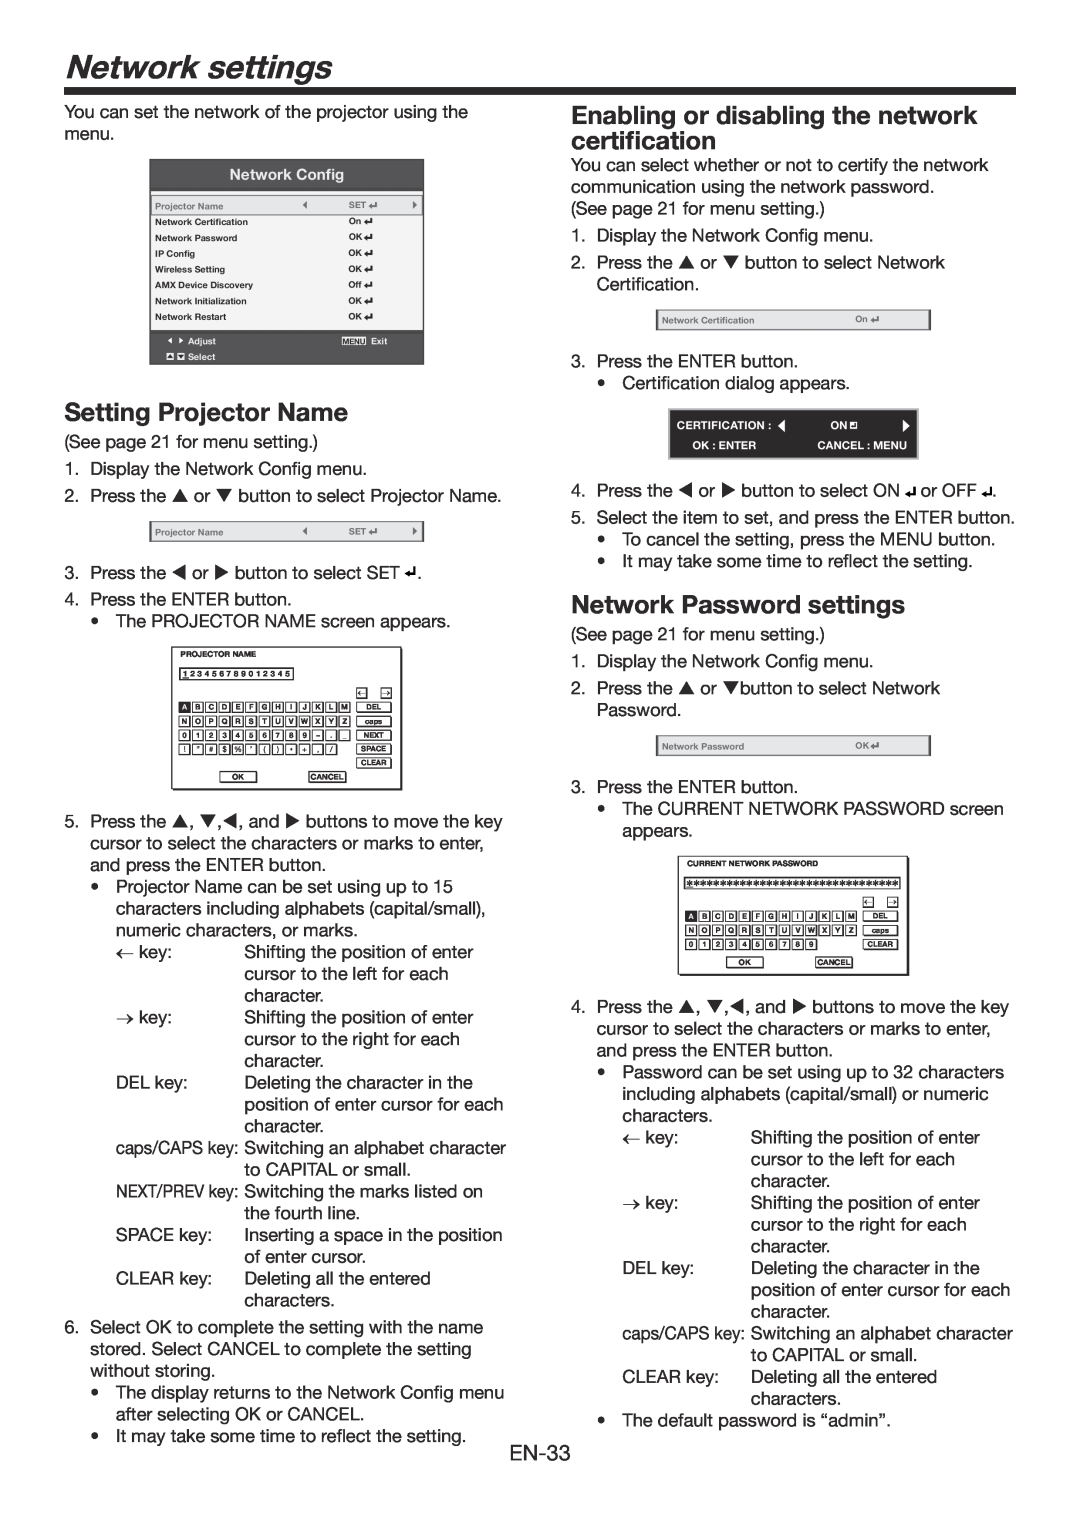 Mitsubishi Electronics WD385U-EST user manual Network settings, Enabling or disabling the network certification 